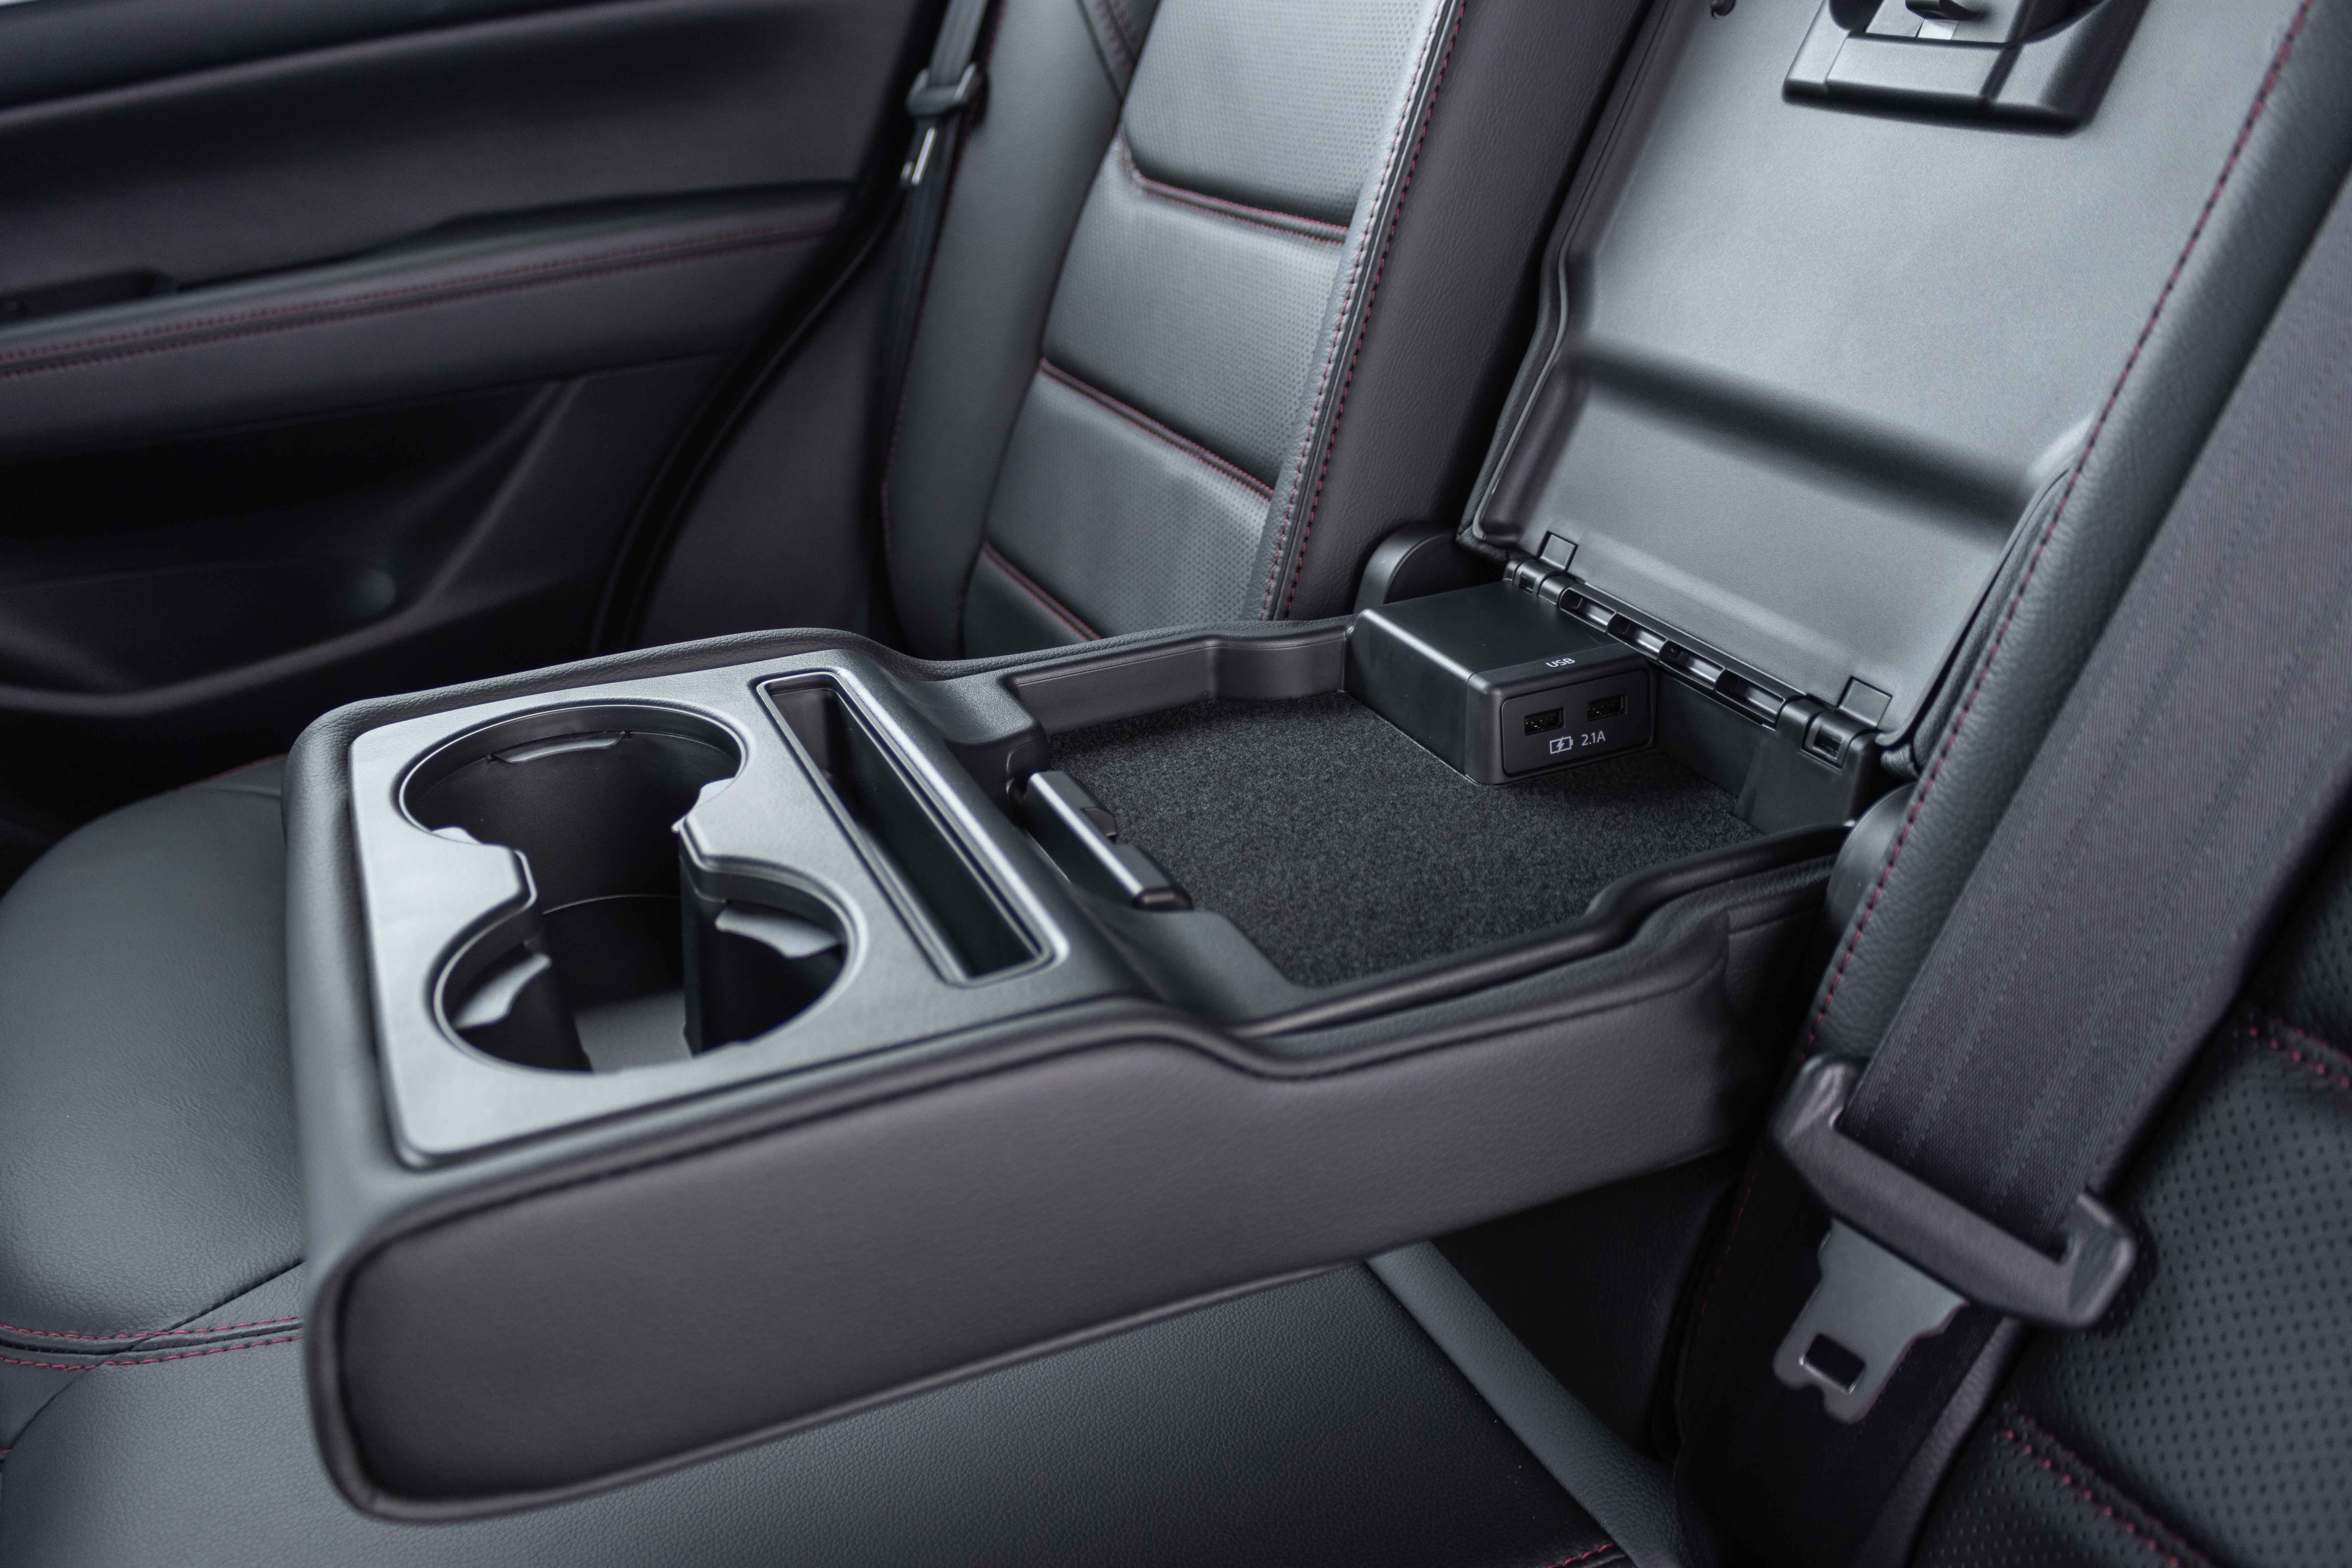 2022 Mazda CX-5 2.0 Luxury (Sports) Singapore - Rear armrest with USB ports